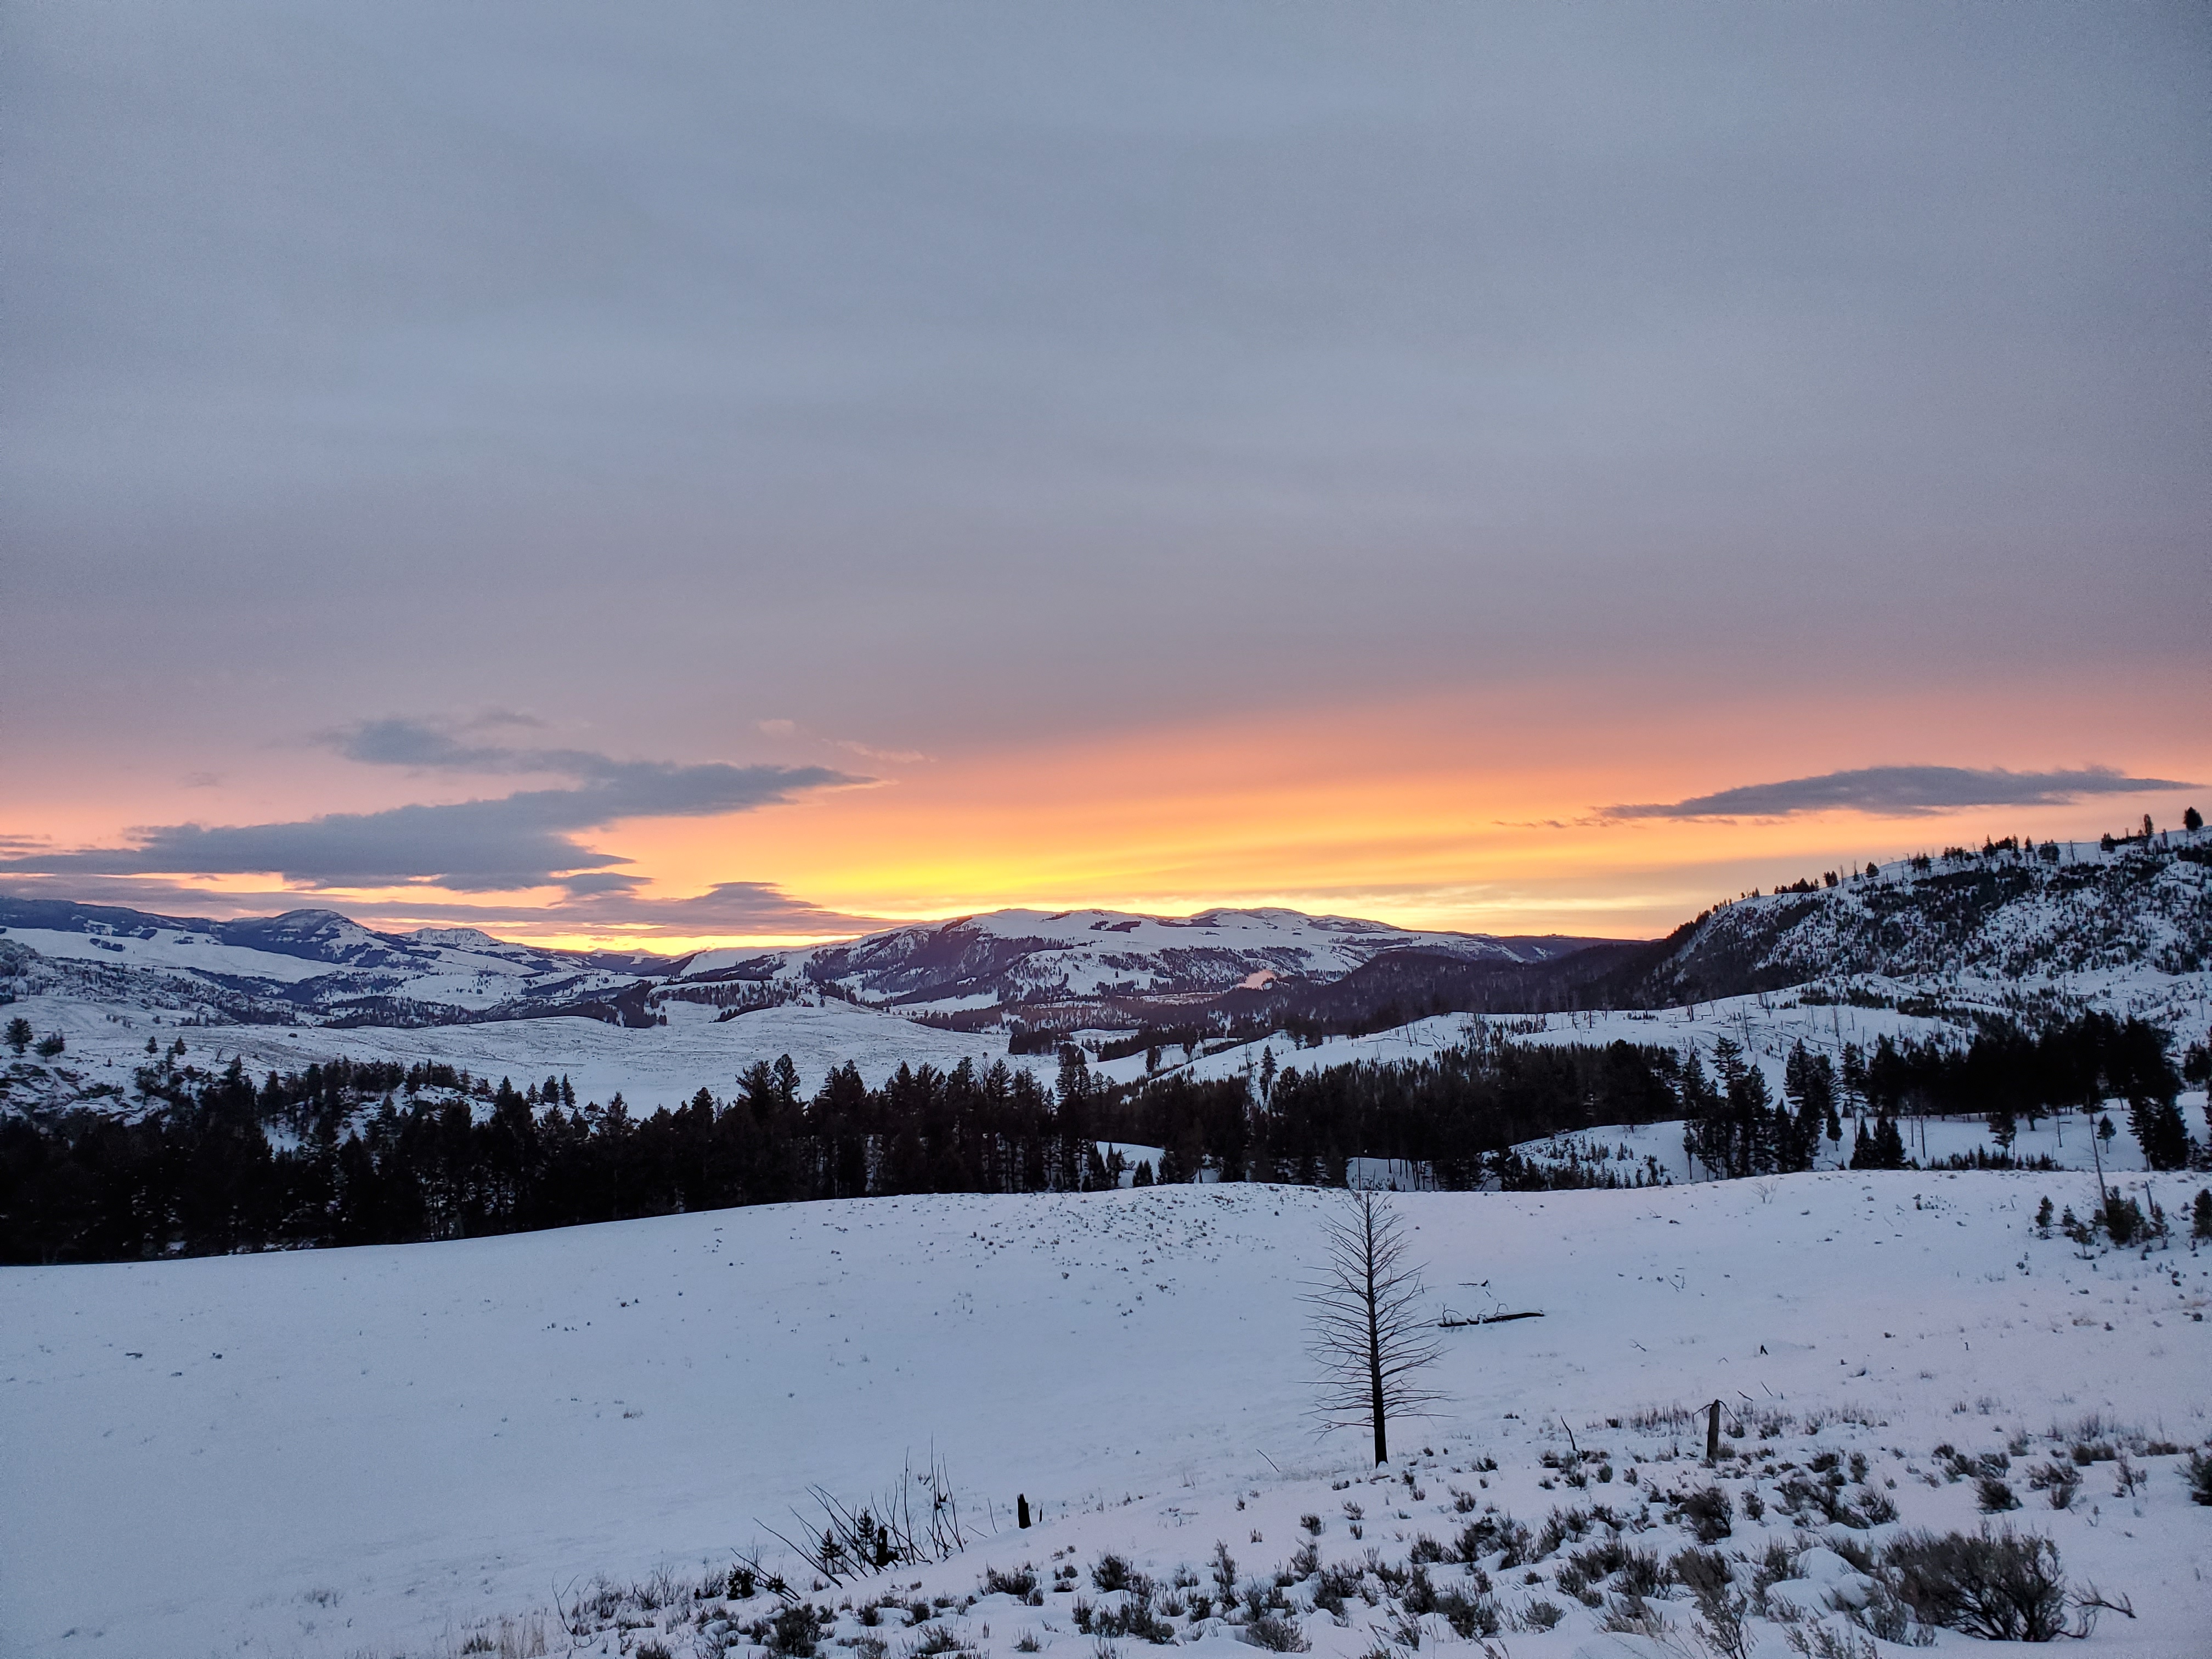 Sunrise over a snowy landscape 